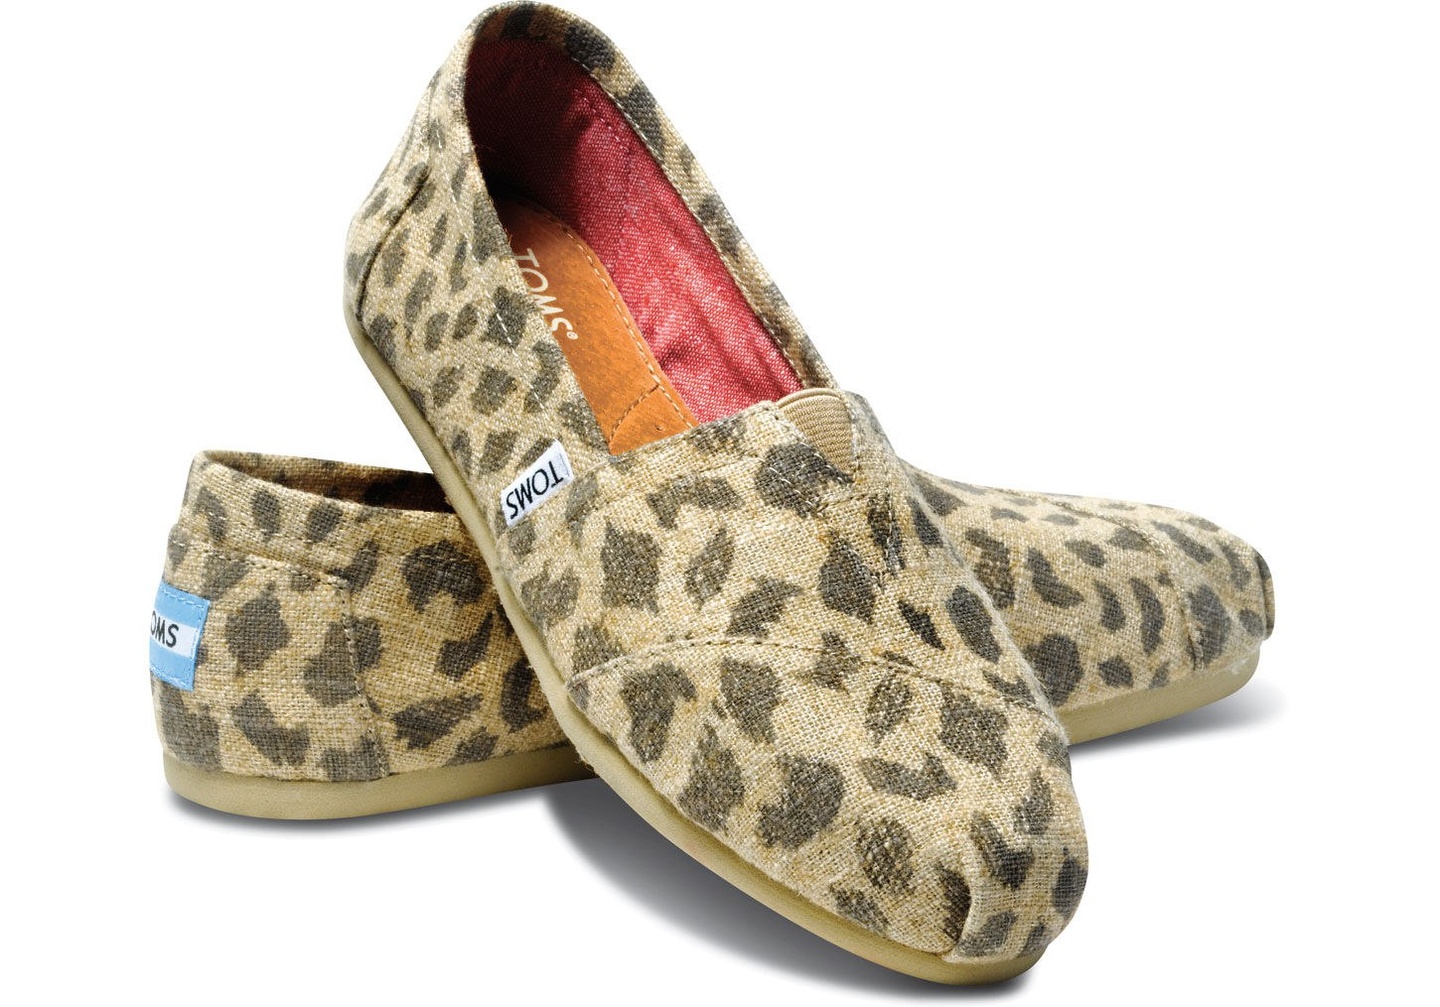 Toms russia. Toms Shoes. Classic women's Shoes. Toms Shoes products. Arctic Protection Burlap Shoes.